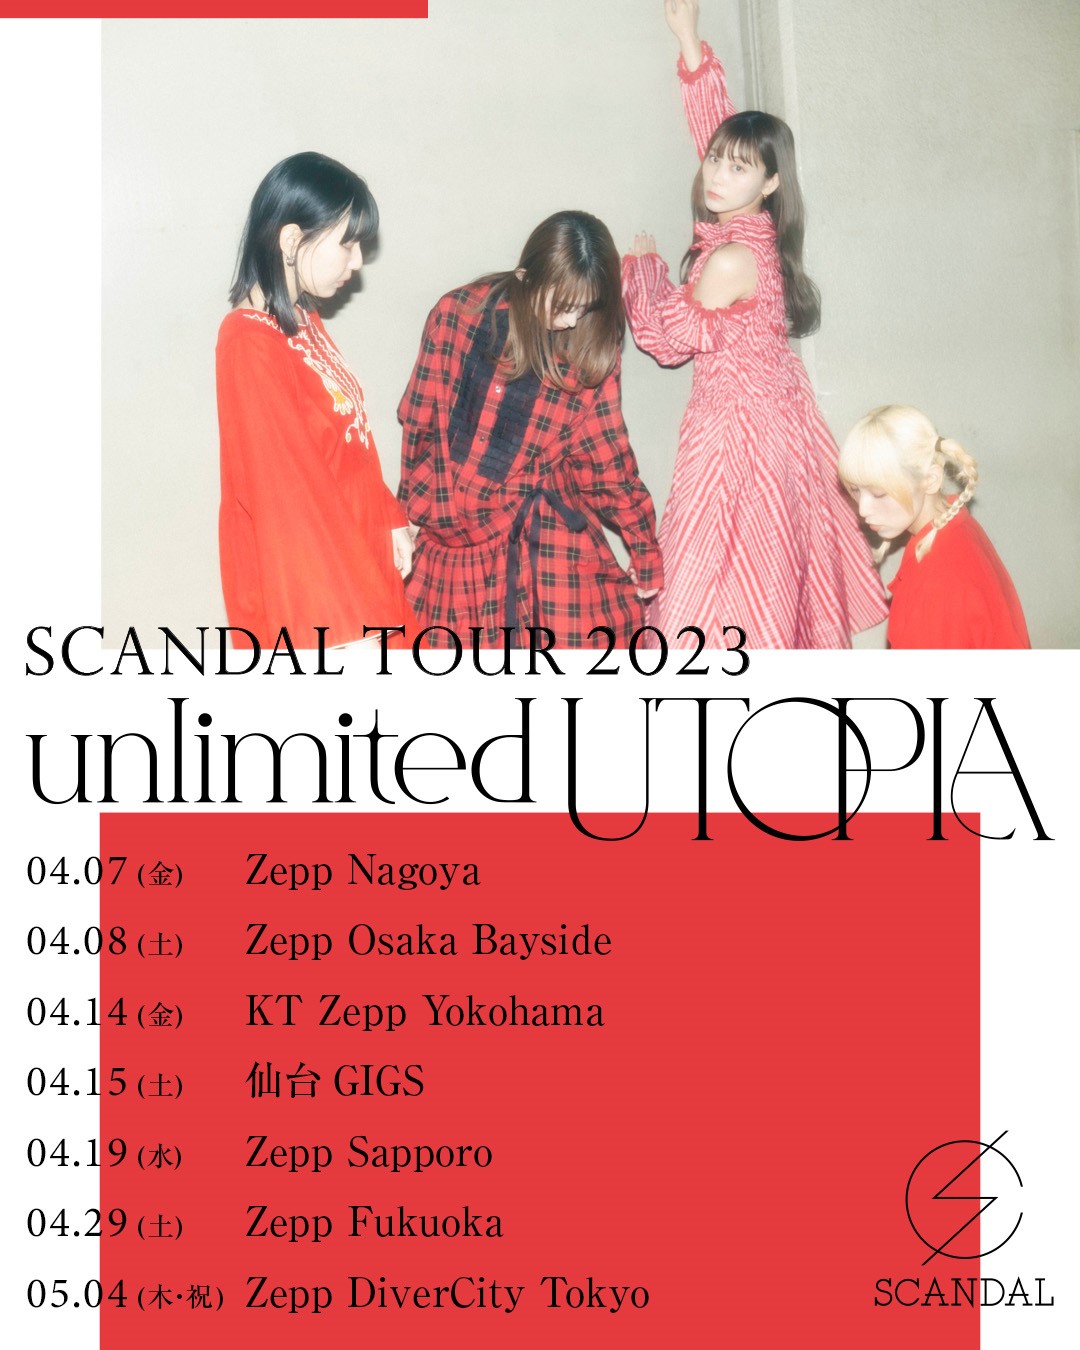 SC Tour 2023 unlimited UTOPIA_visual